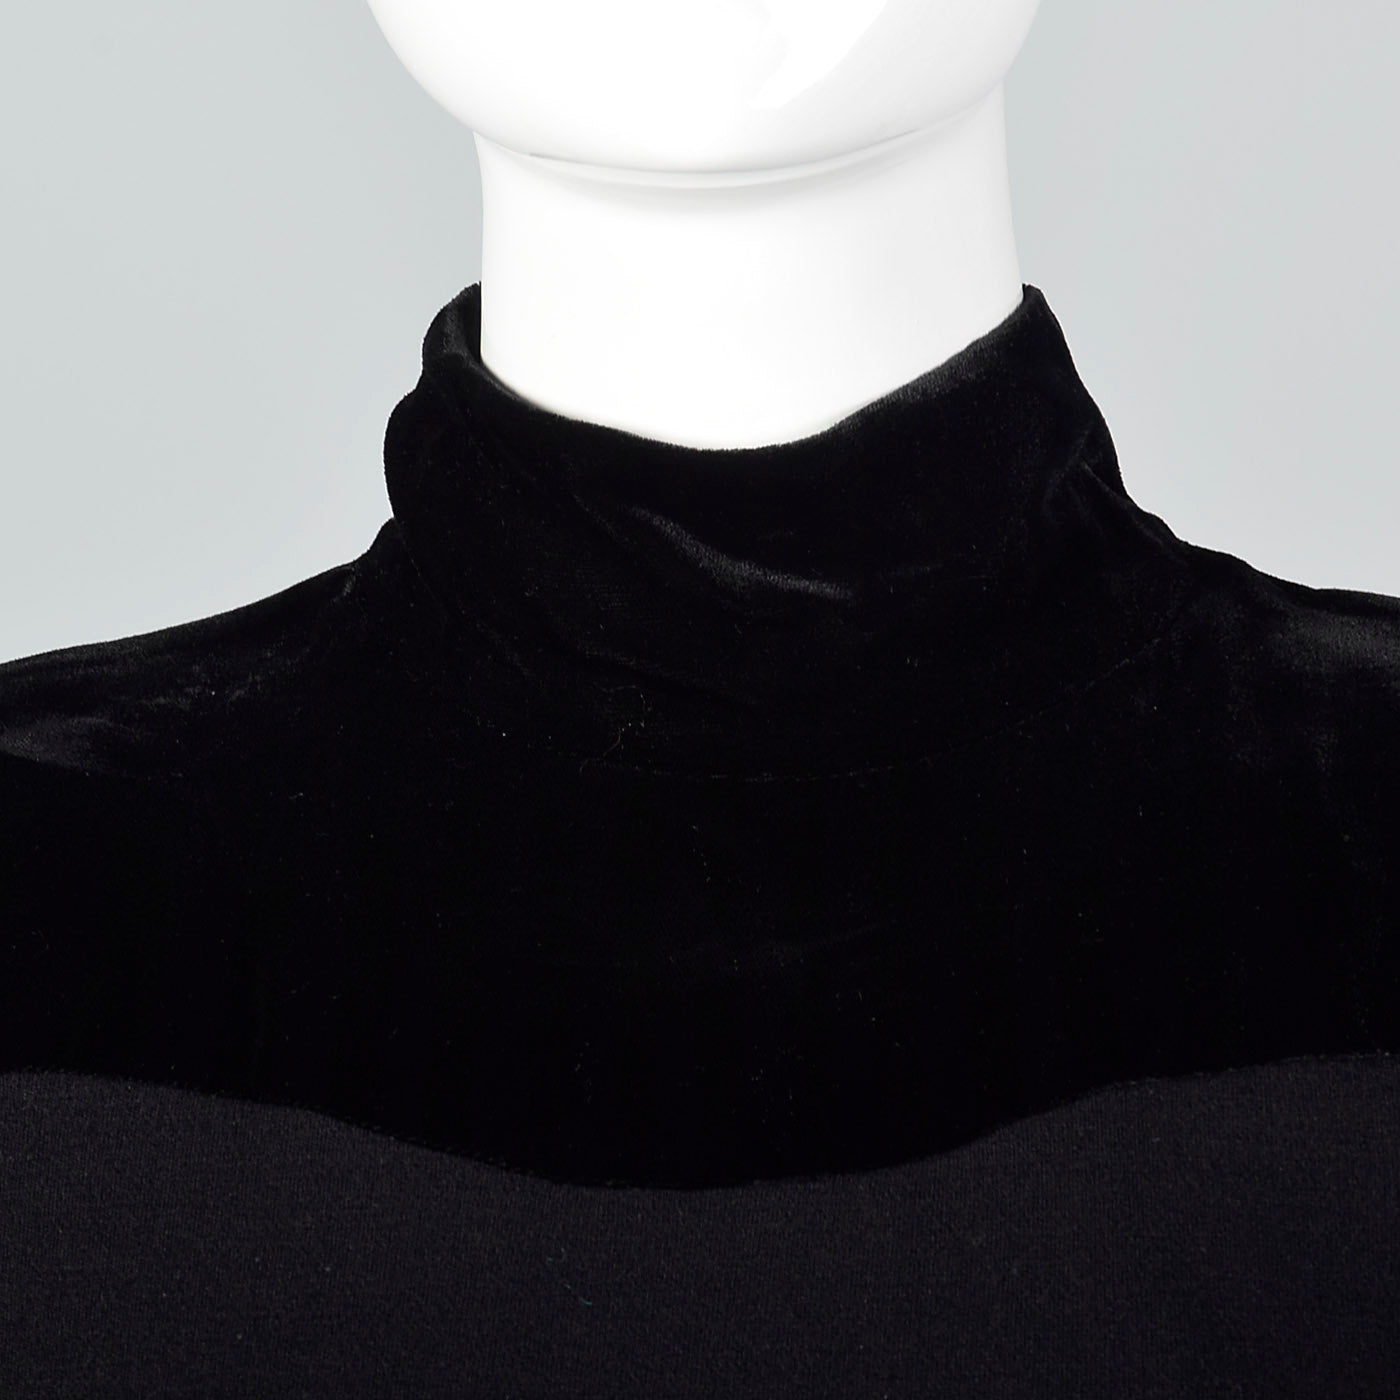 Lanvin Tight Black Pencil Dress with Velvet Shoulders